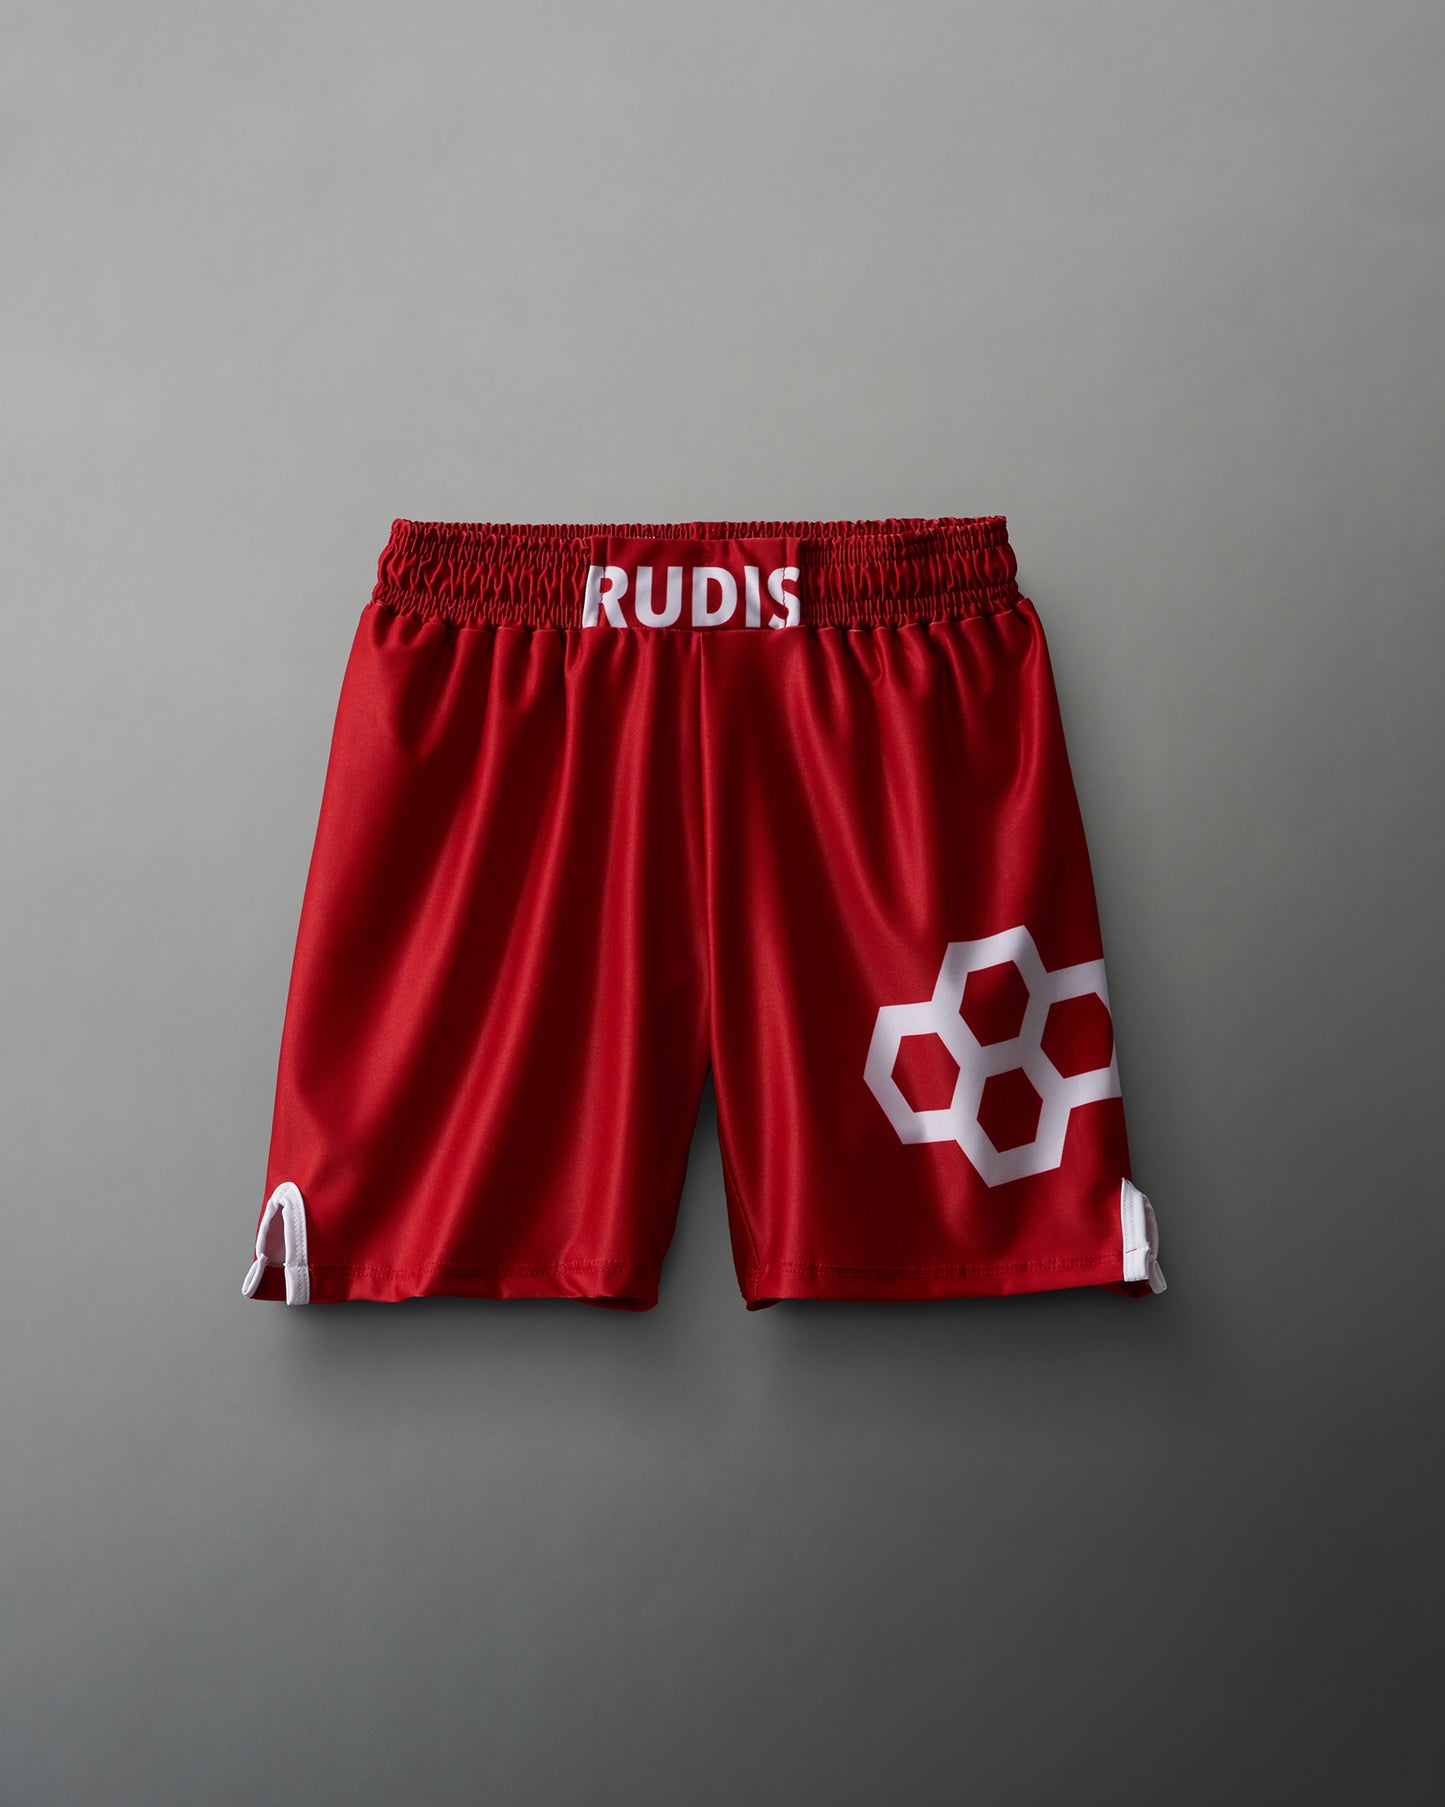 RUDIS Throwdown Youth Elite Wrestling Shorts